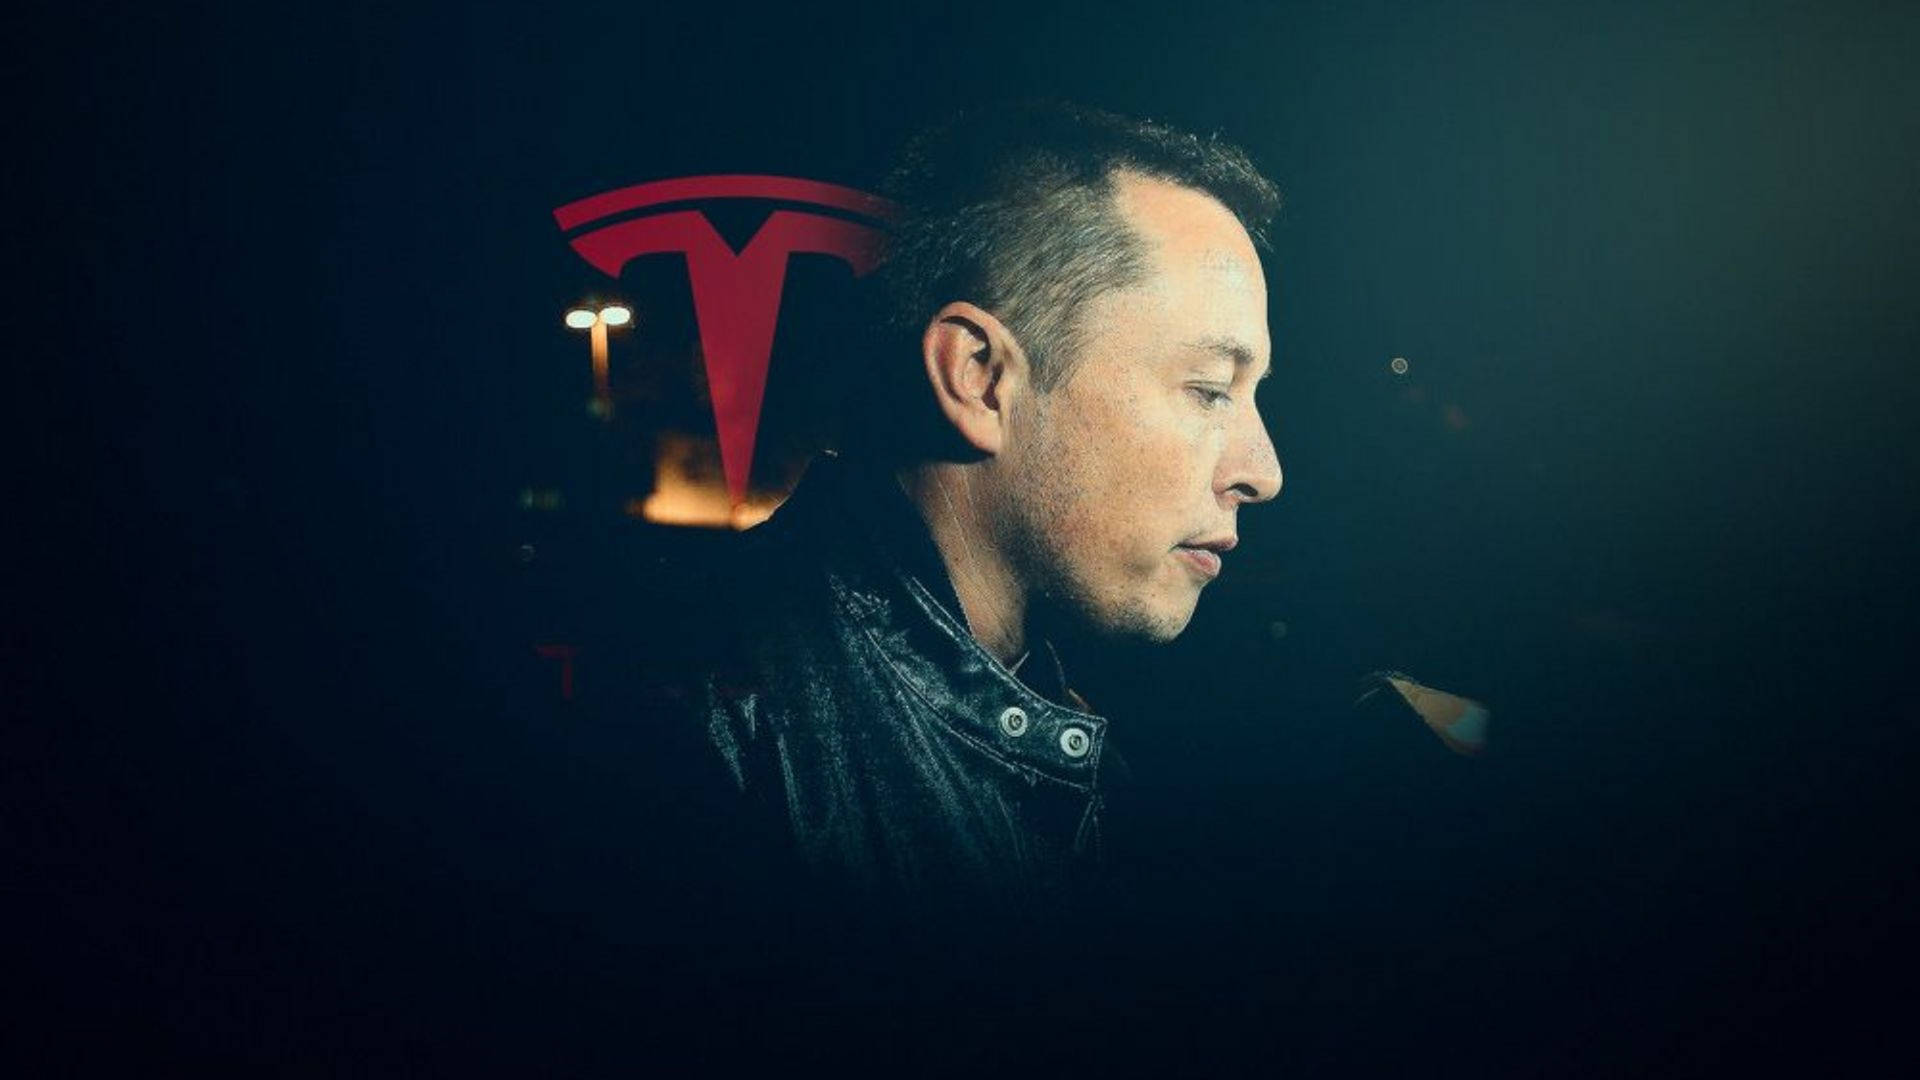 Elon Musk Tesla Dark Portrait Background